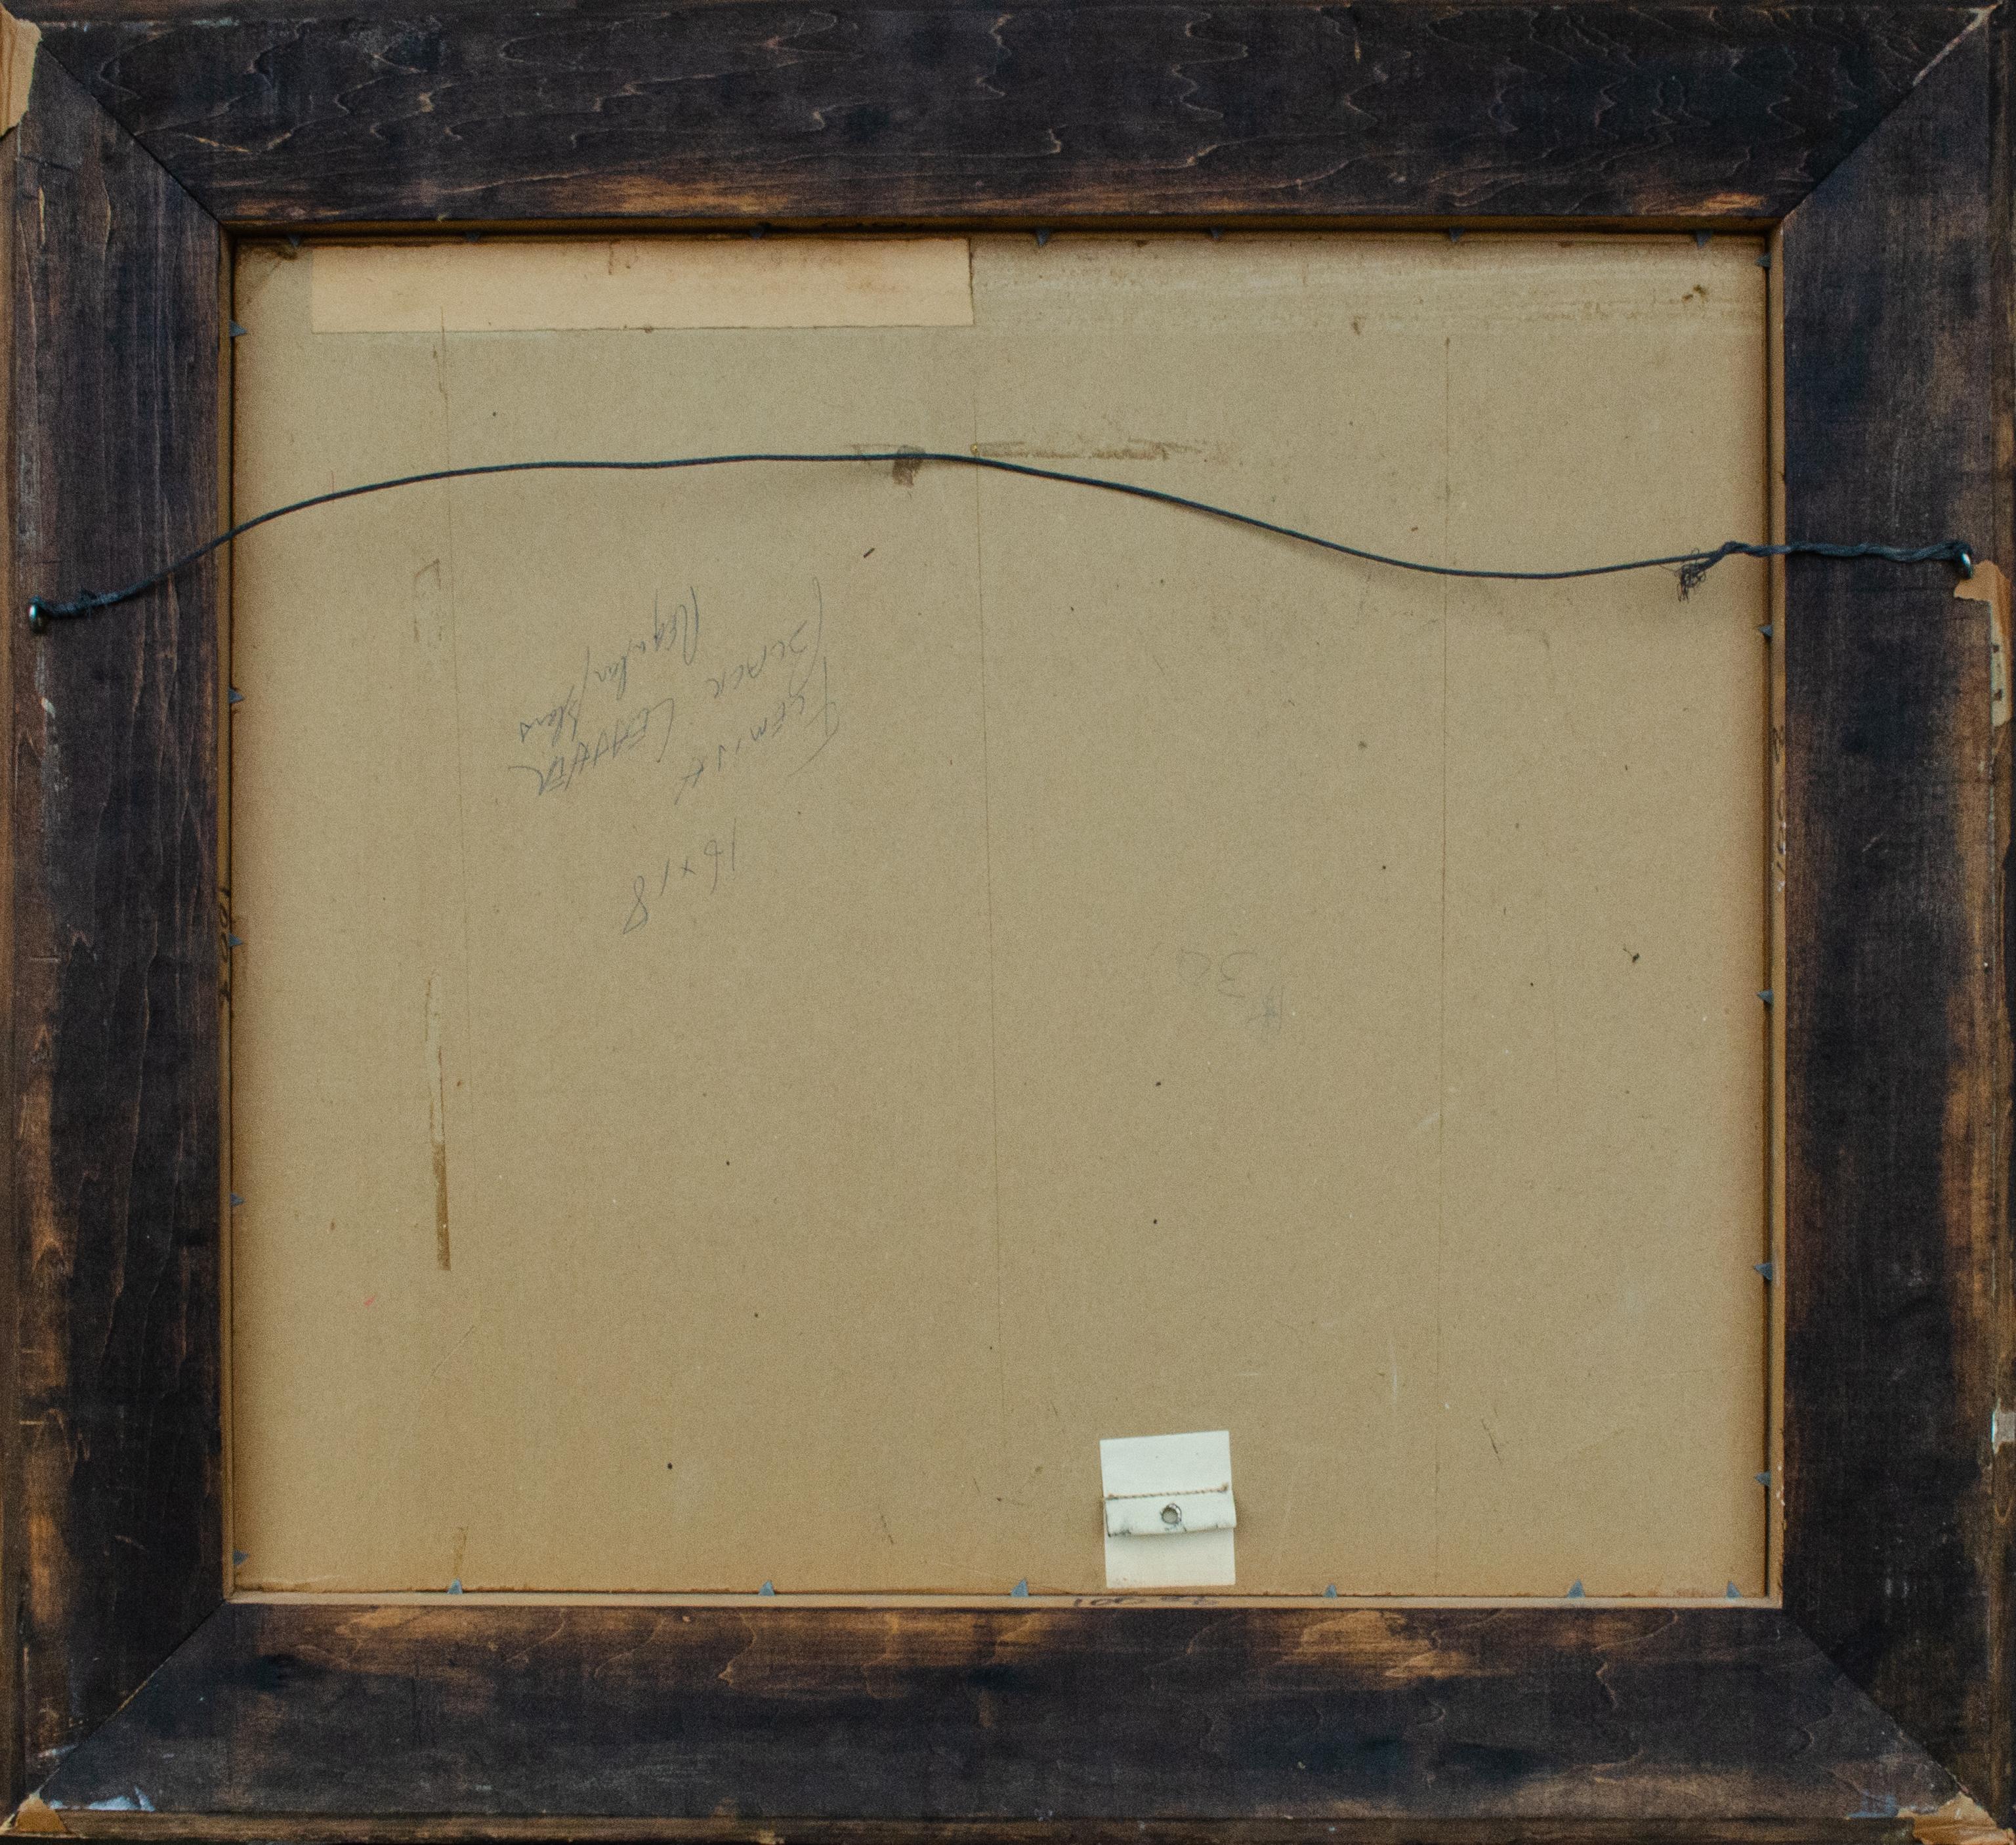 Schwarzes flämisches Leder, 1962
Pastell auf Papier
16 x 18 Zoll.
Gerahmt: 21 1/2 x 23 3/4 x 1 Zoll.
Signiert und datiert unten rechts
Verso beschriftet
